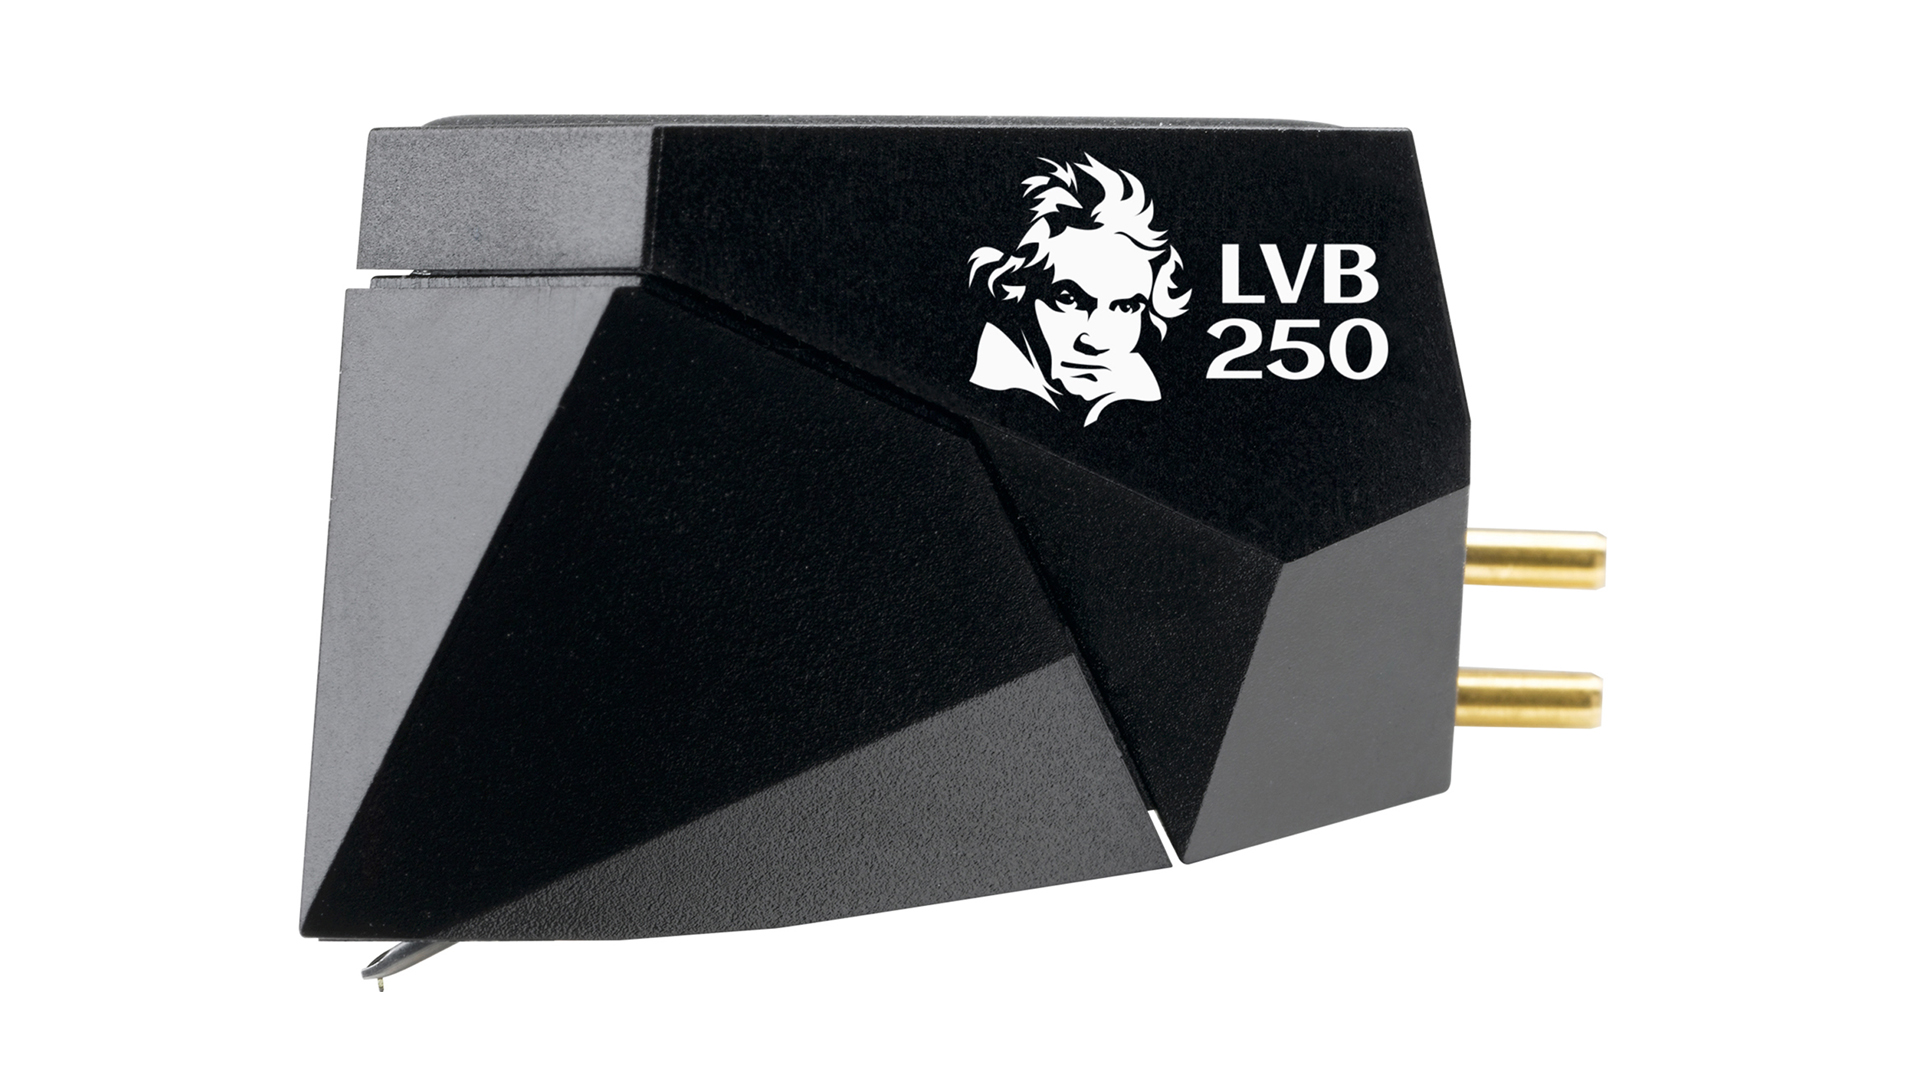 LVB for Ludwig van Beethoven (Image Credit: Ortofon)